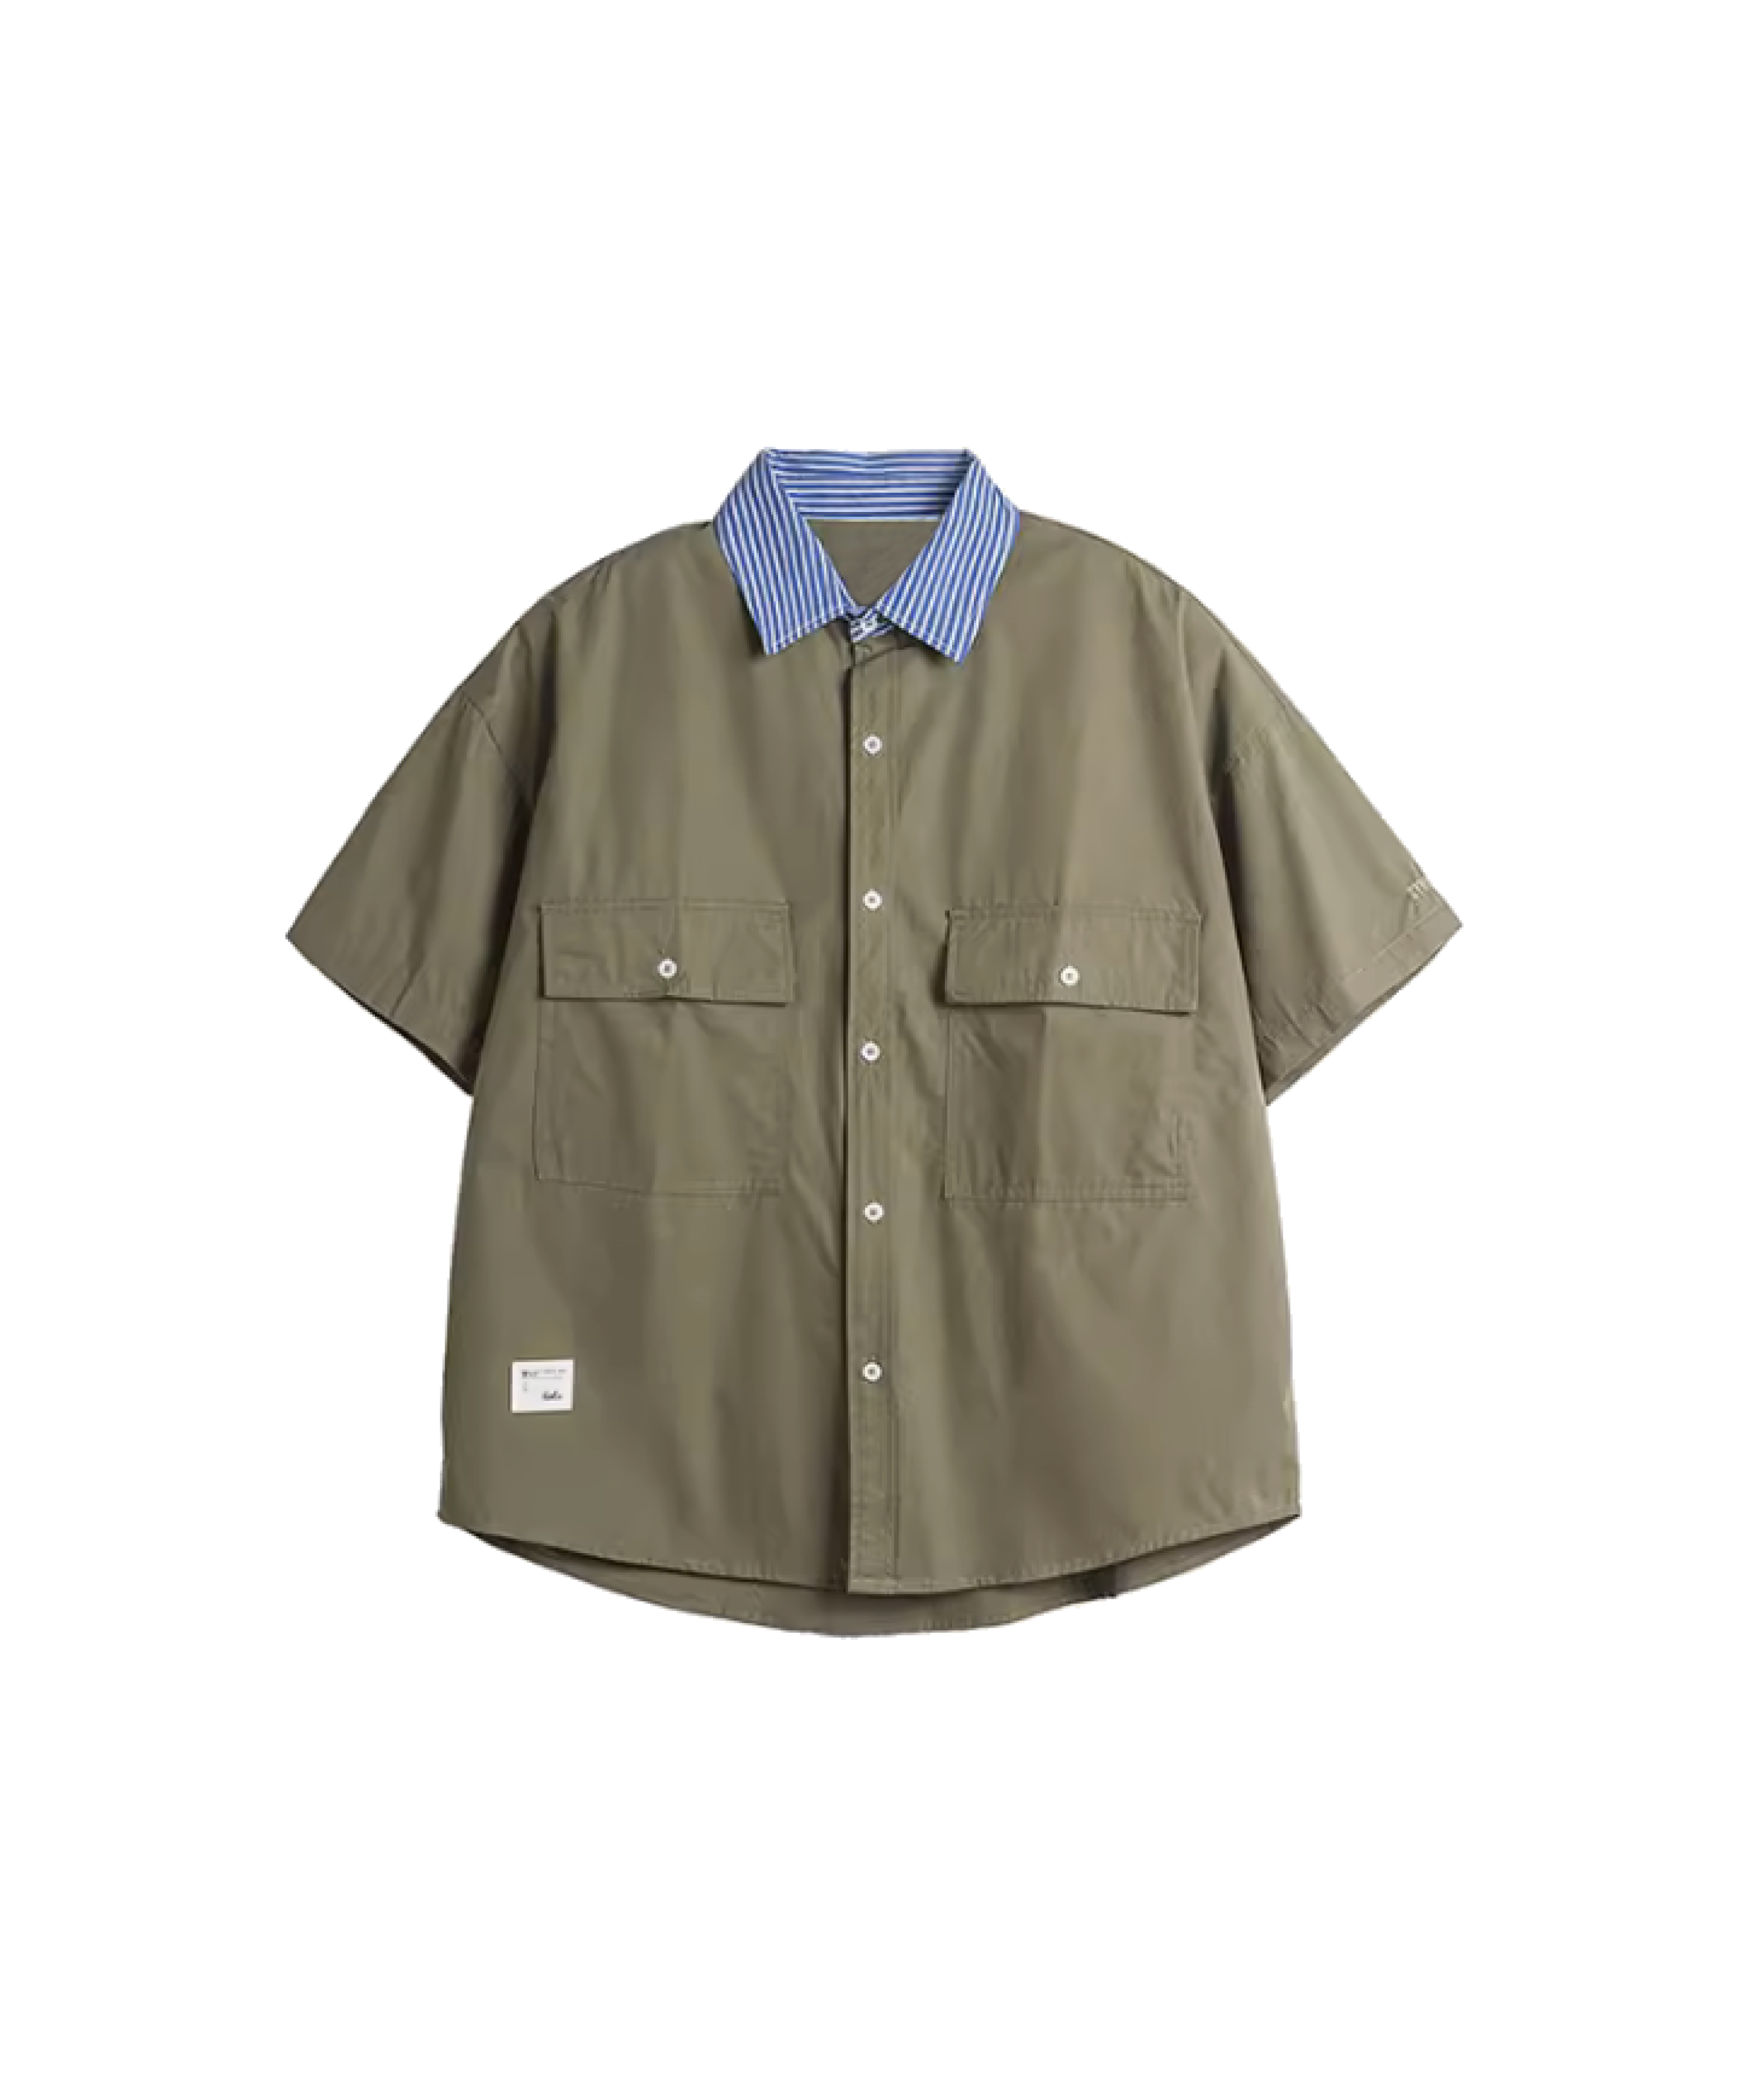 Pocket Polo Shirt With Stripe Collar